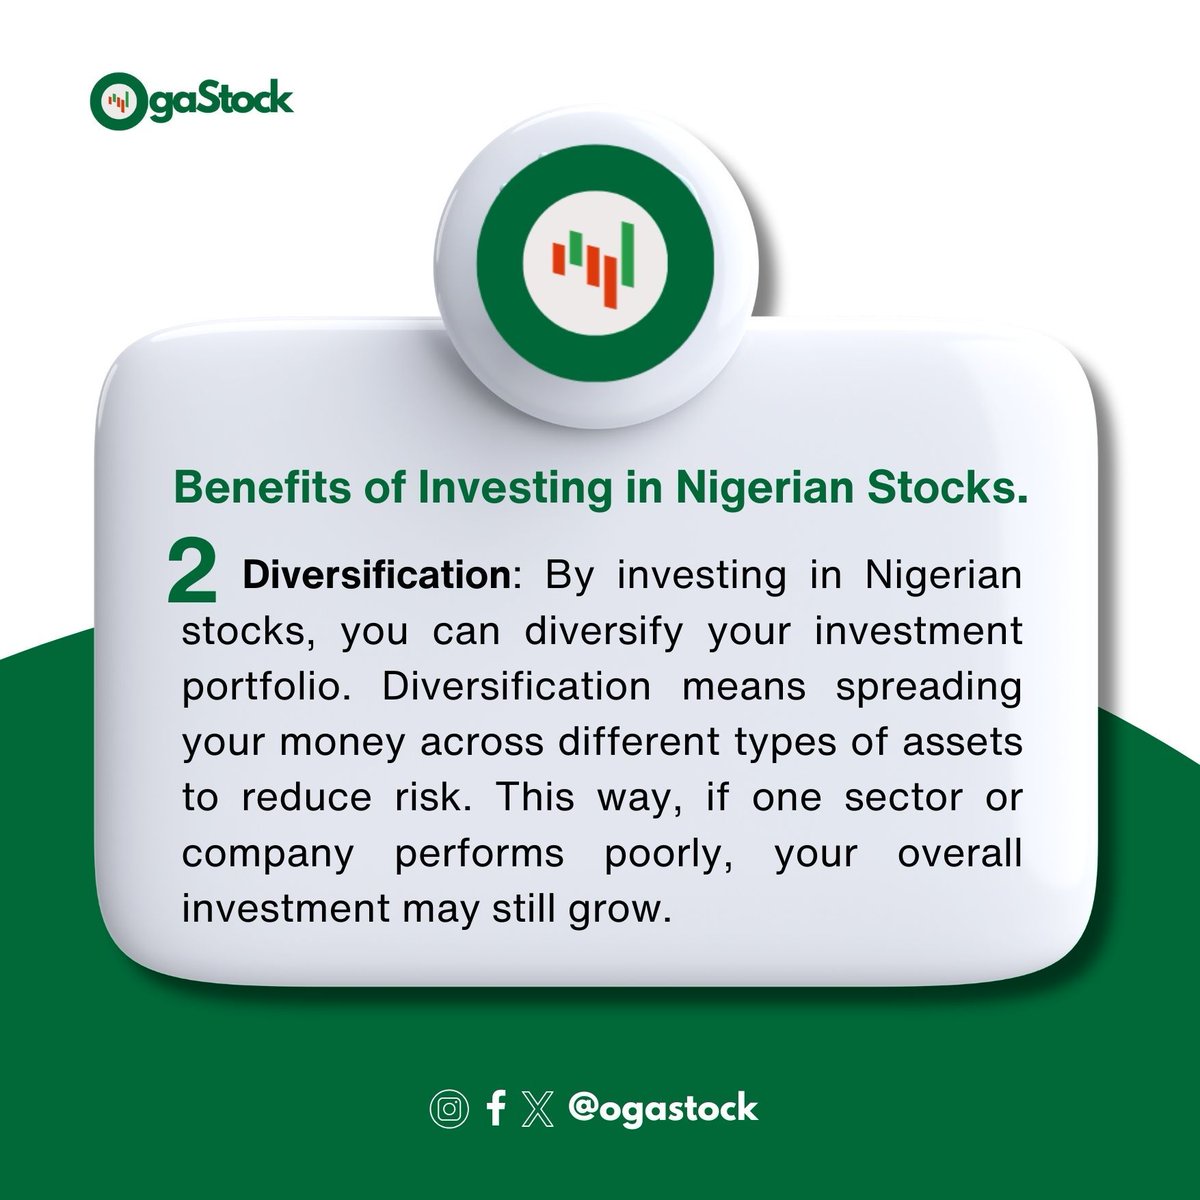 #ogogastock #Nigeriastockexchange #stock #NigerianStocks #InvestmentOpportunities #FinancialGrowth #DiversifyYourPortfolio #DividendIncome #CapitalAppreciation #OwnershipMatters #InflationHedge #EconomicDevelopment #InvestInNigeria